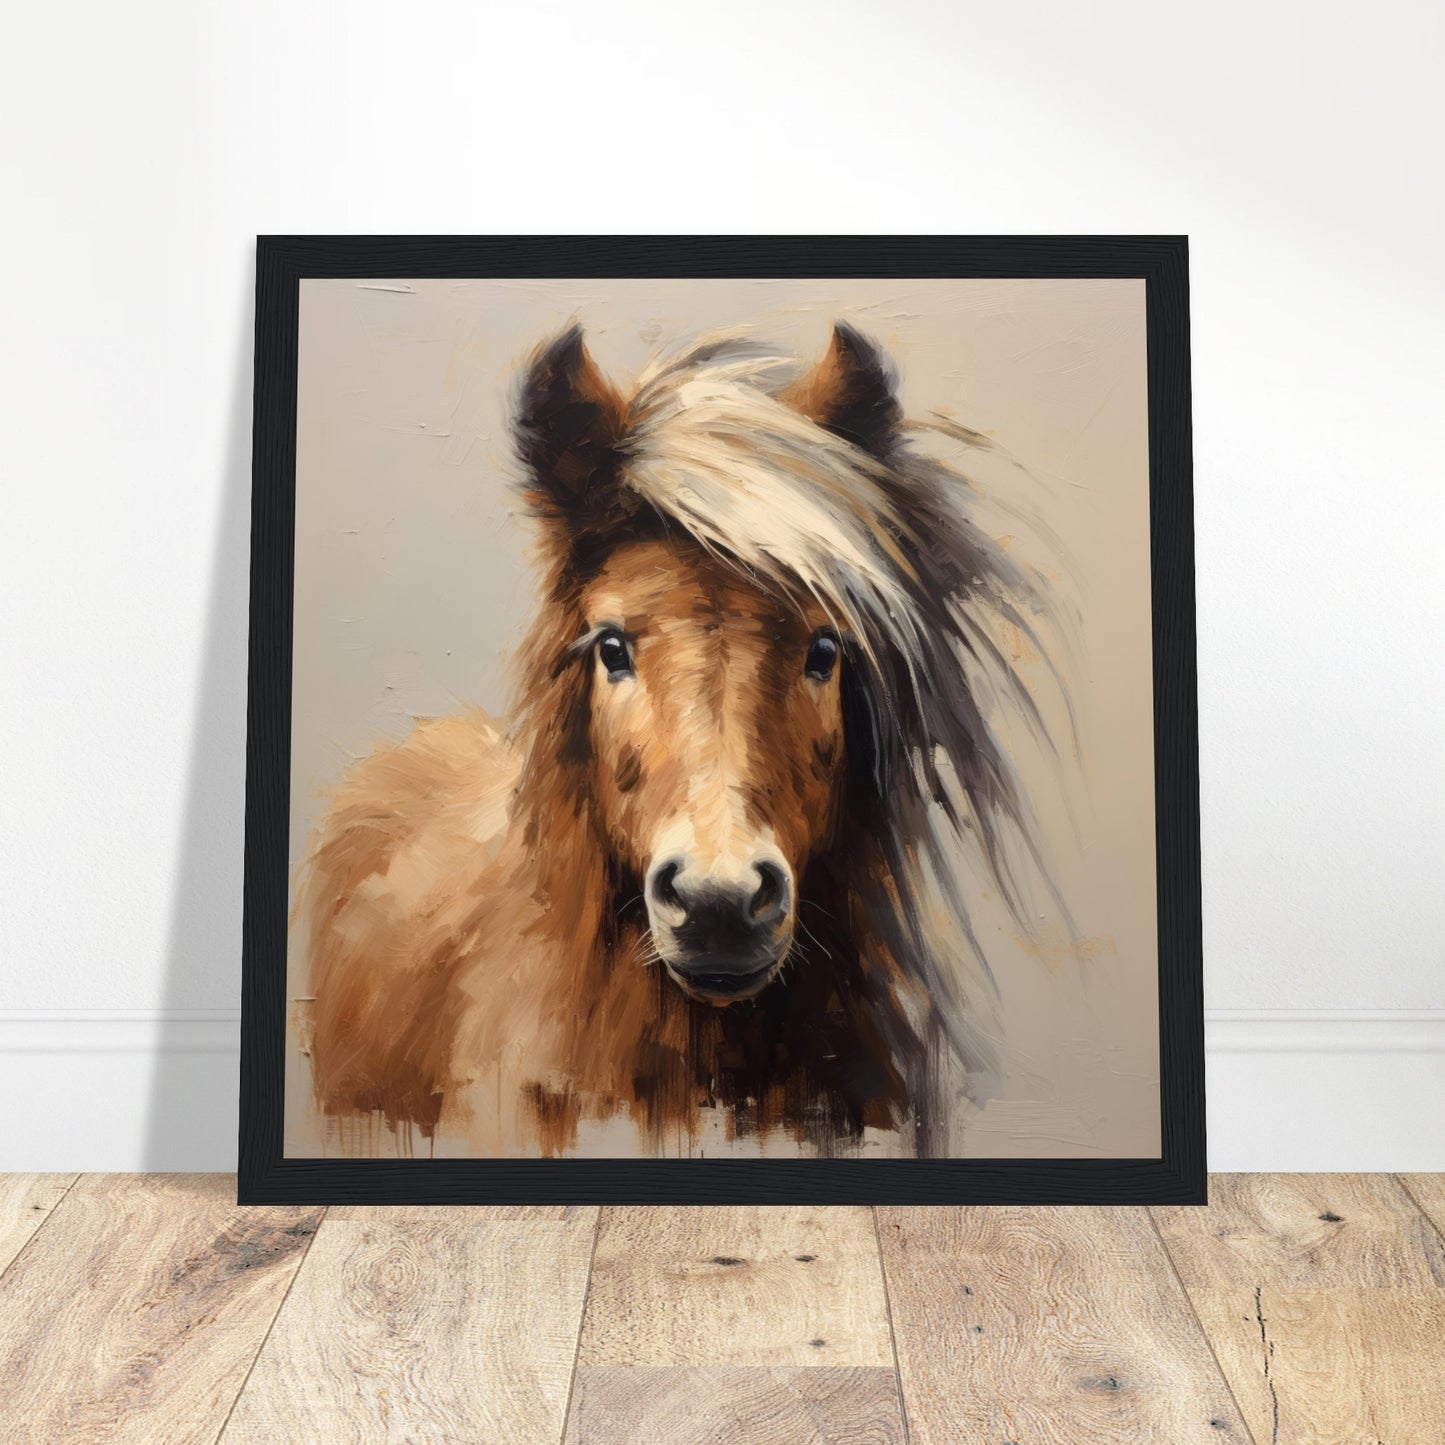 Horse Majesty #14 - Print Room Ltd Wood frame 30x30 cm / 12x12"